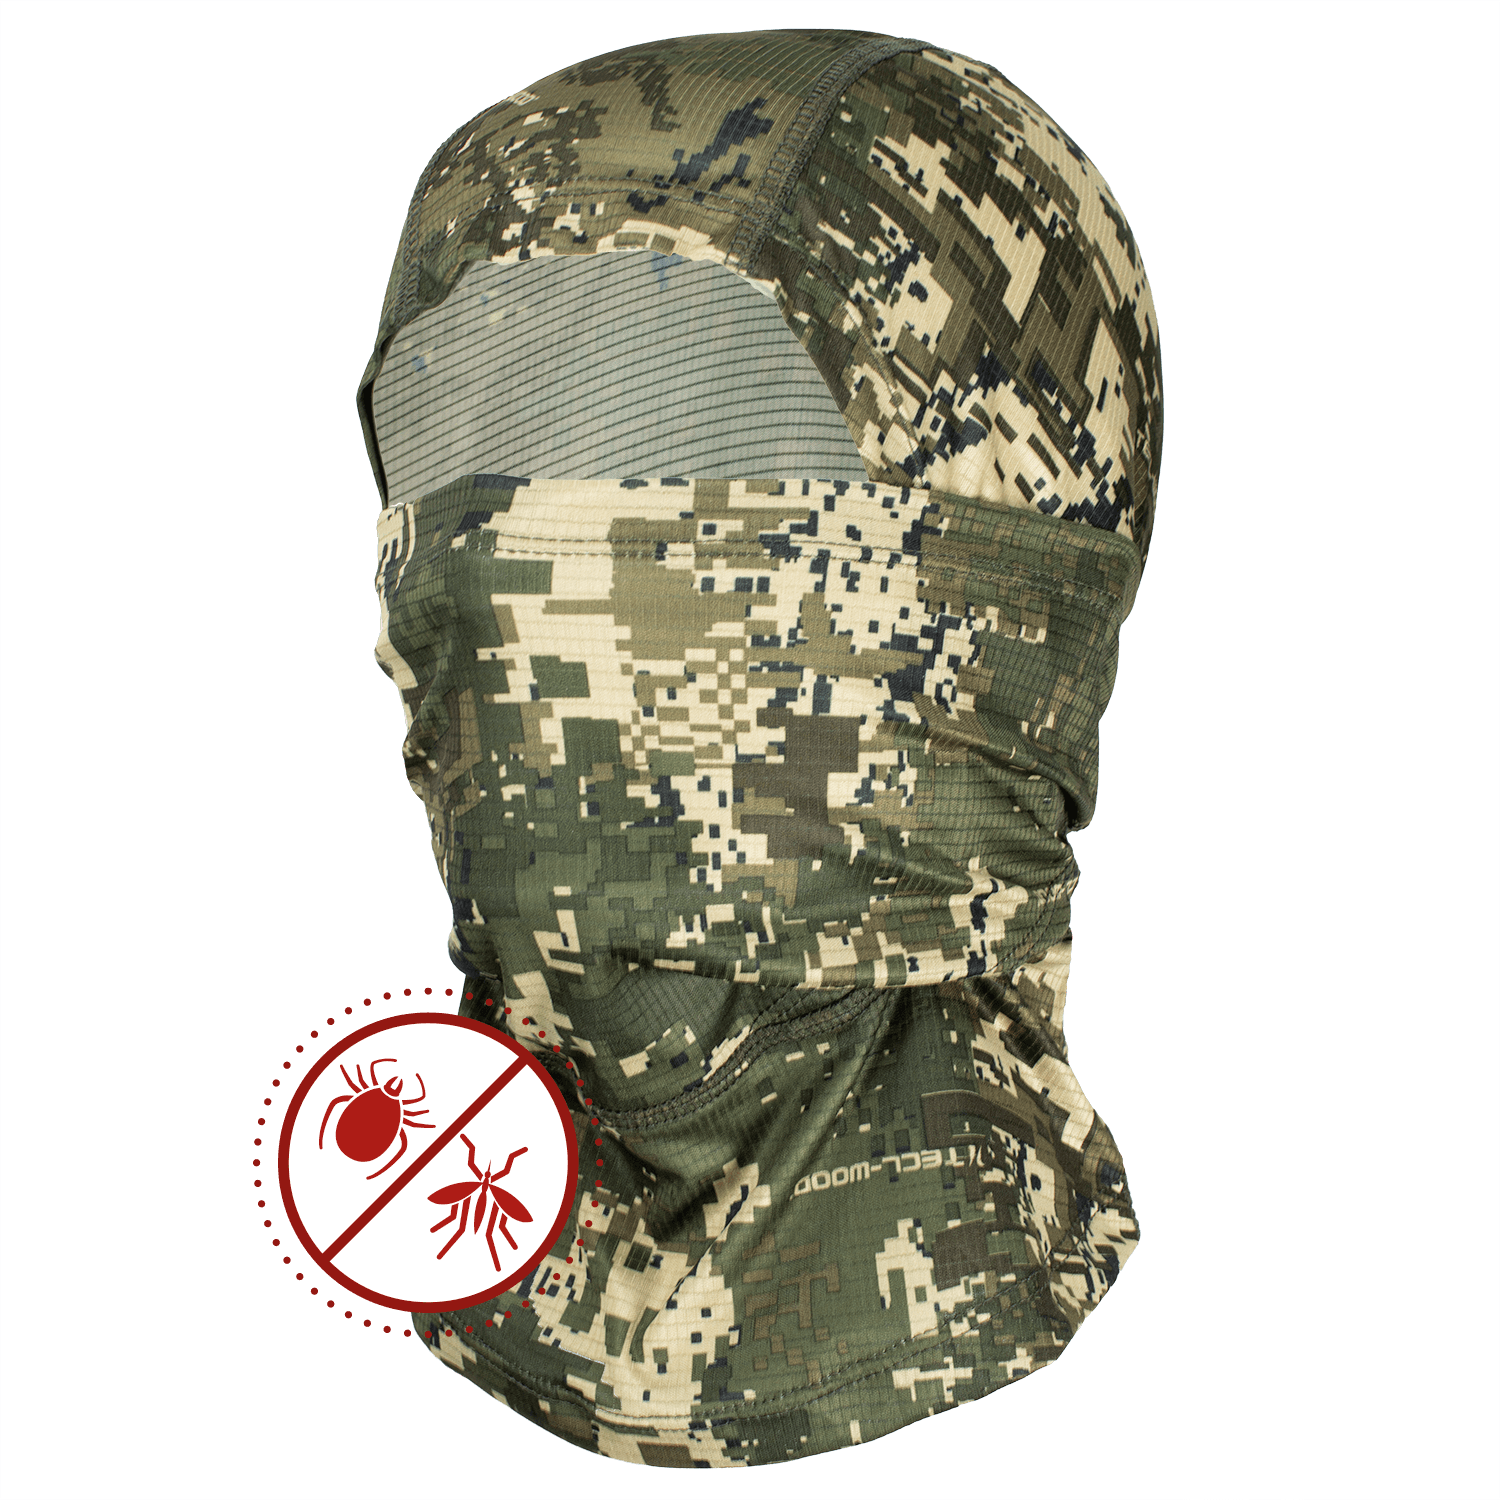  Pirscher Gear Ultralicht Tanatex camouflagemasker (Optimax) - Jachtkleding Heren